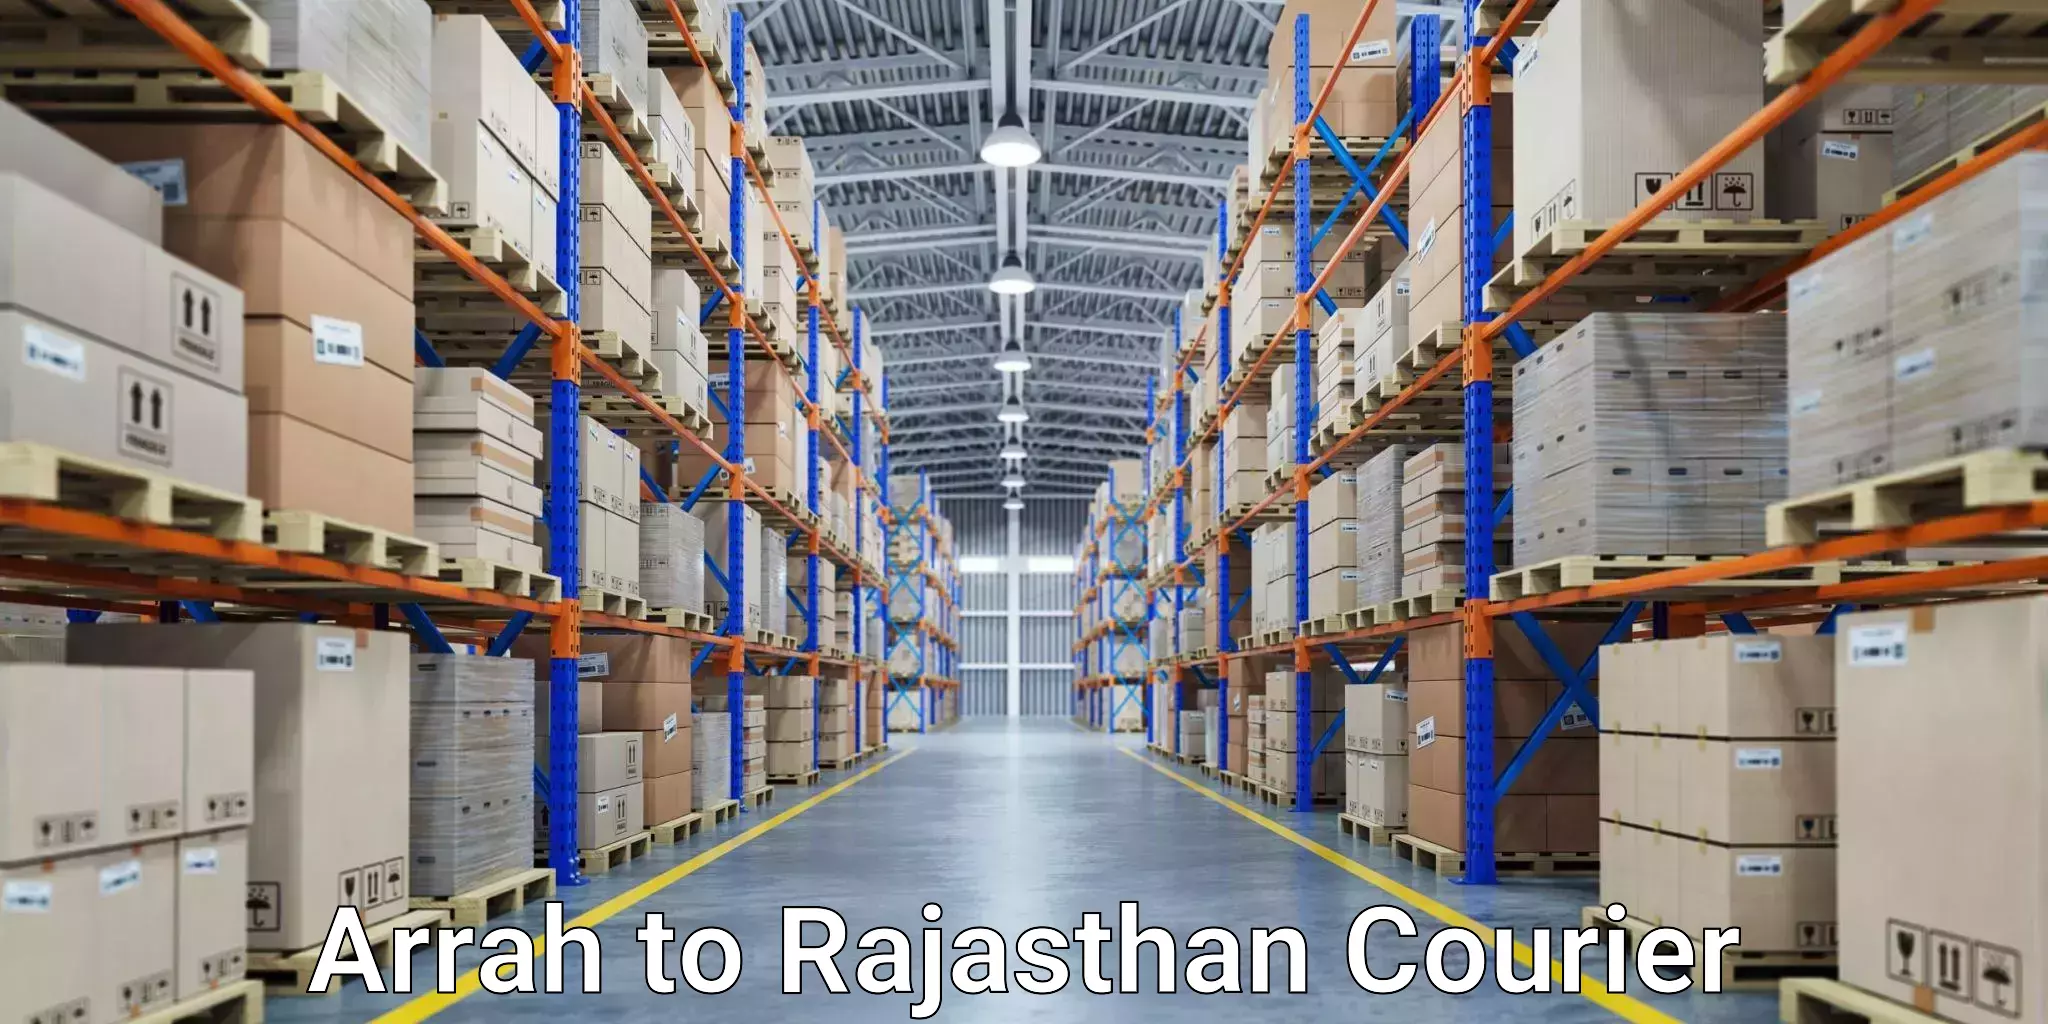 Customizable delivery plans Arrah to Suratgarh